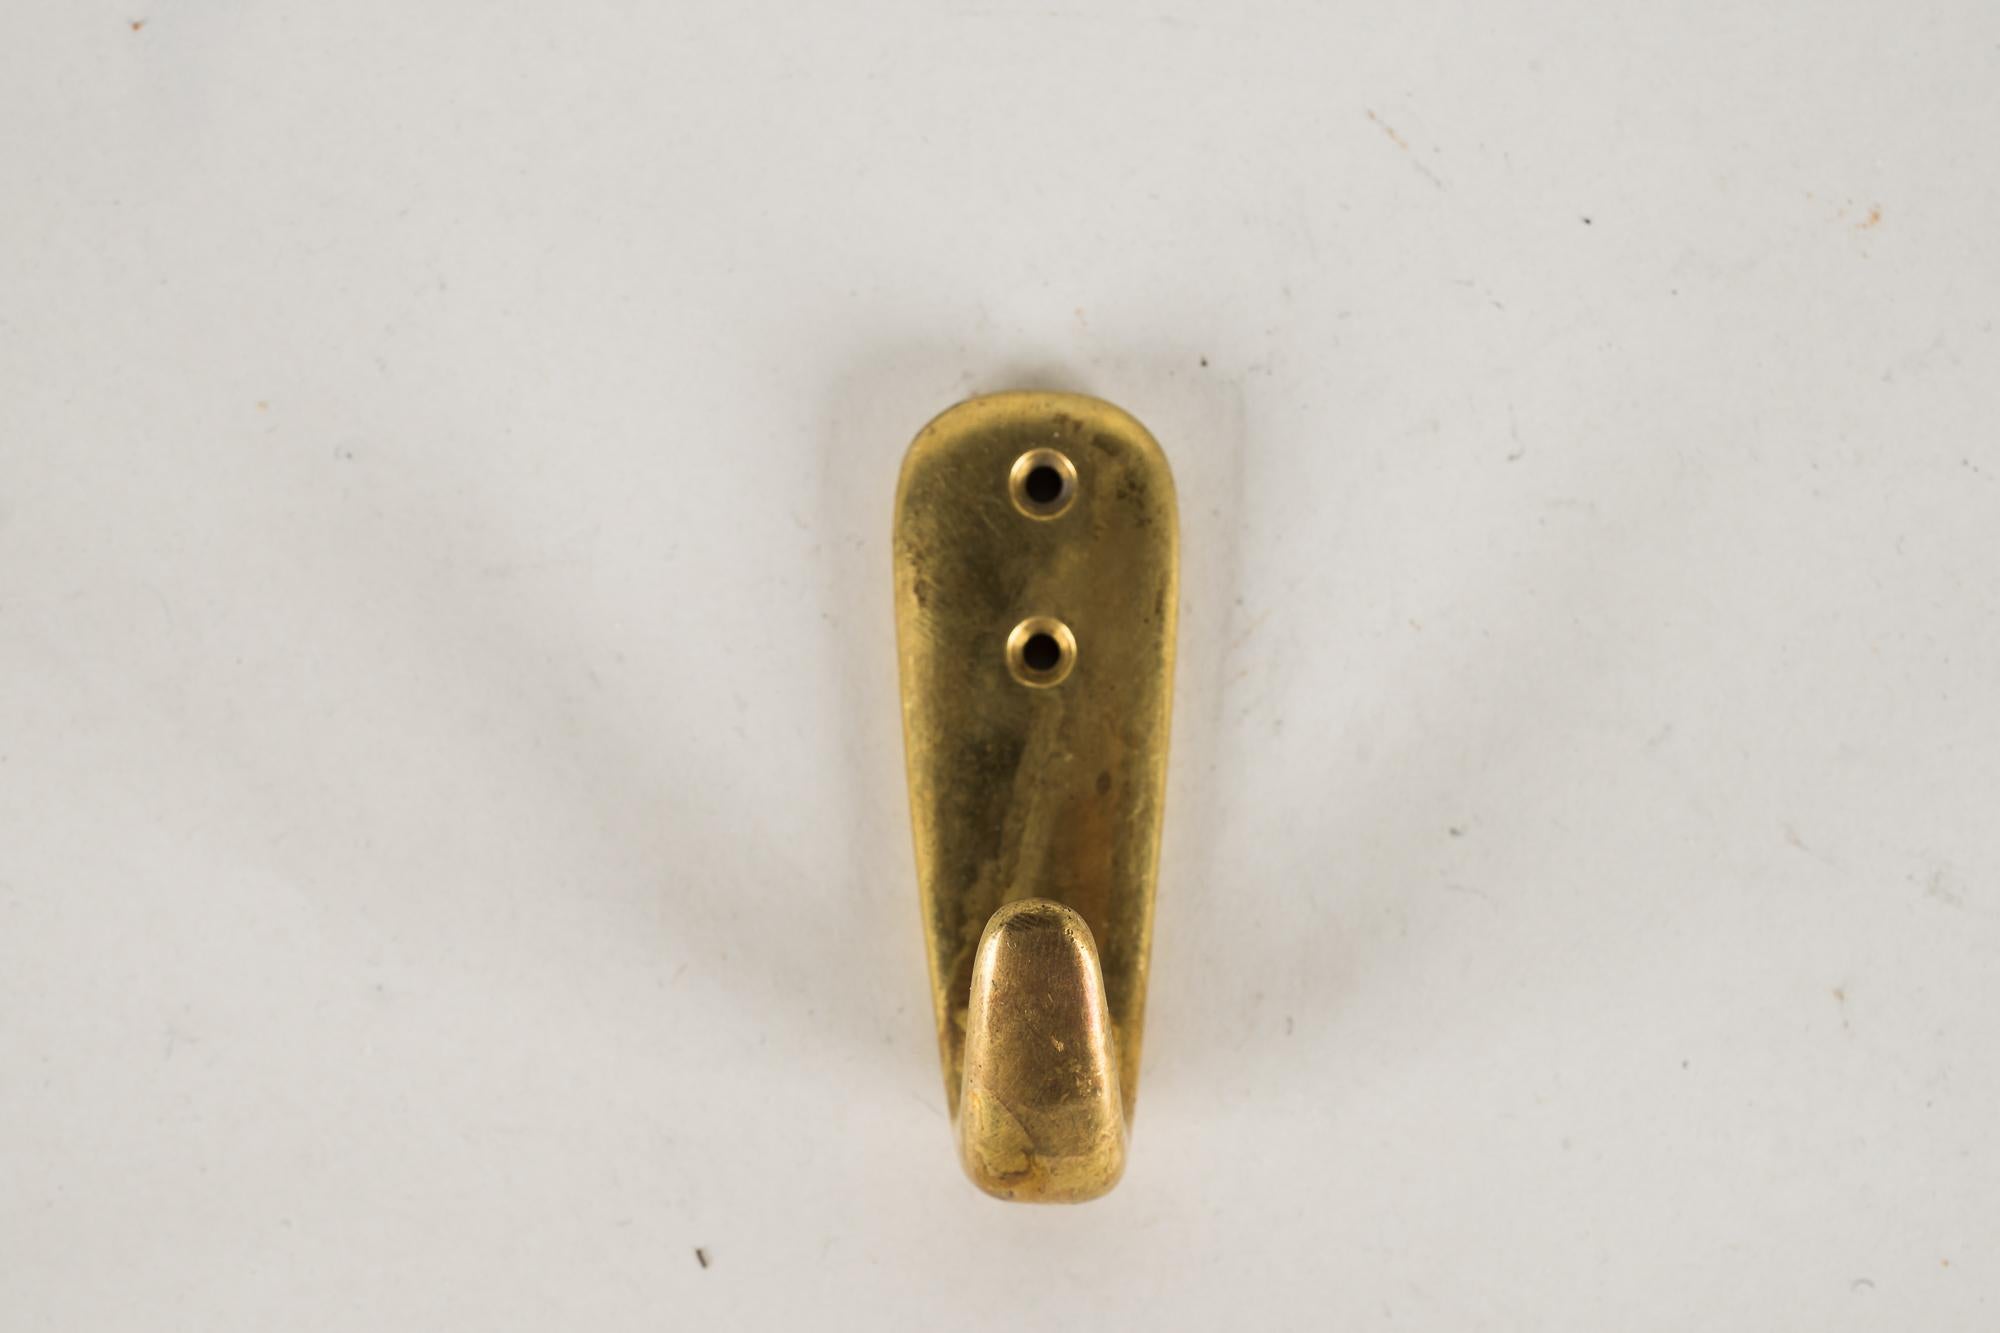 1x Small brass hook vienna around 1950s
Original condition.